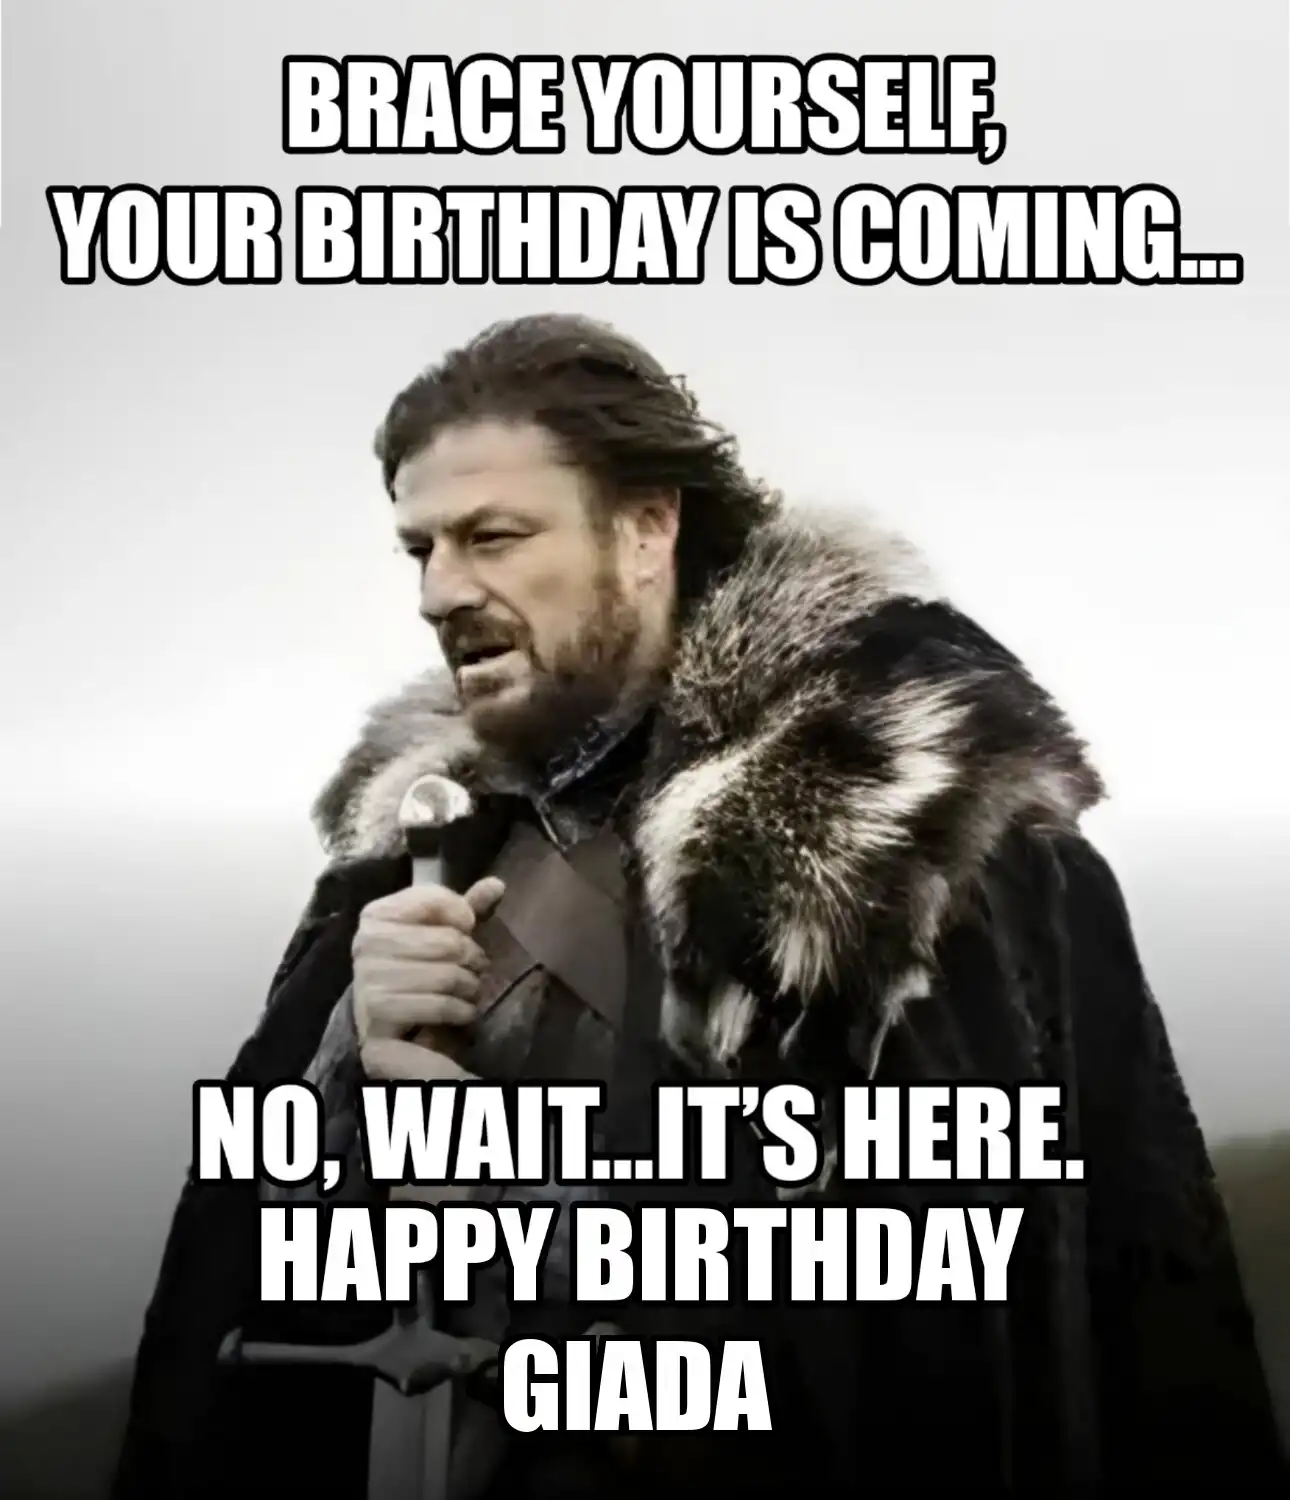 Happy Birthday Giada Brace Yourself Your Birthday Is Coming Meme